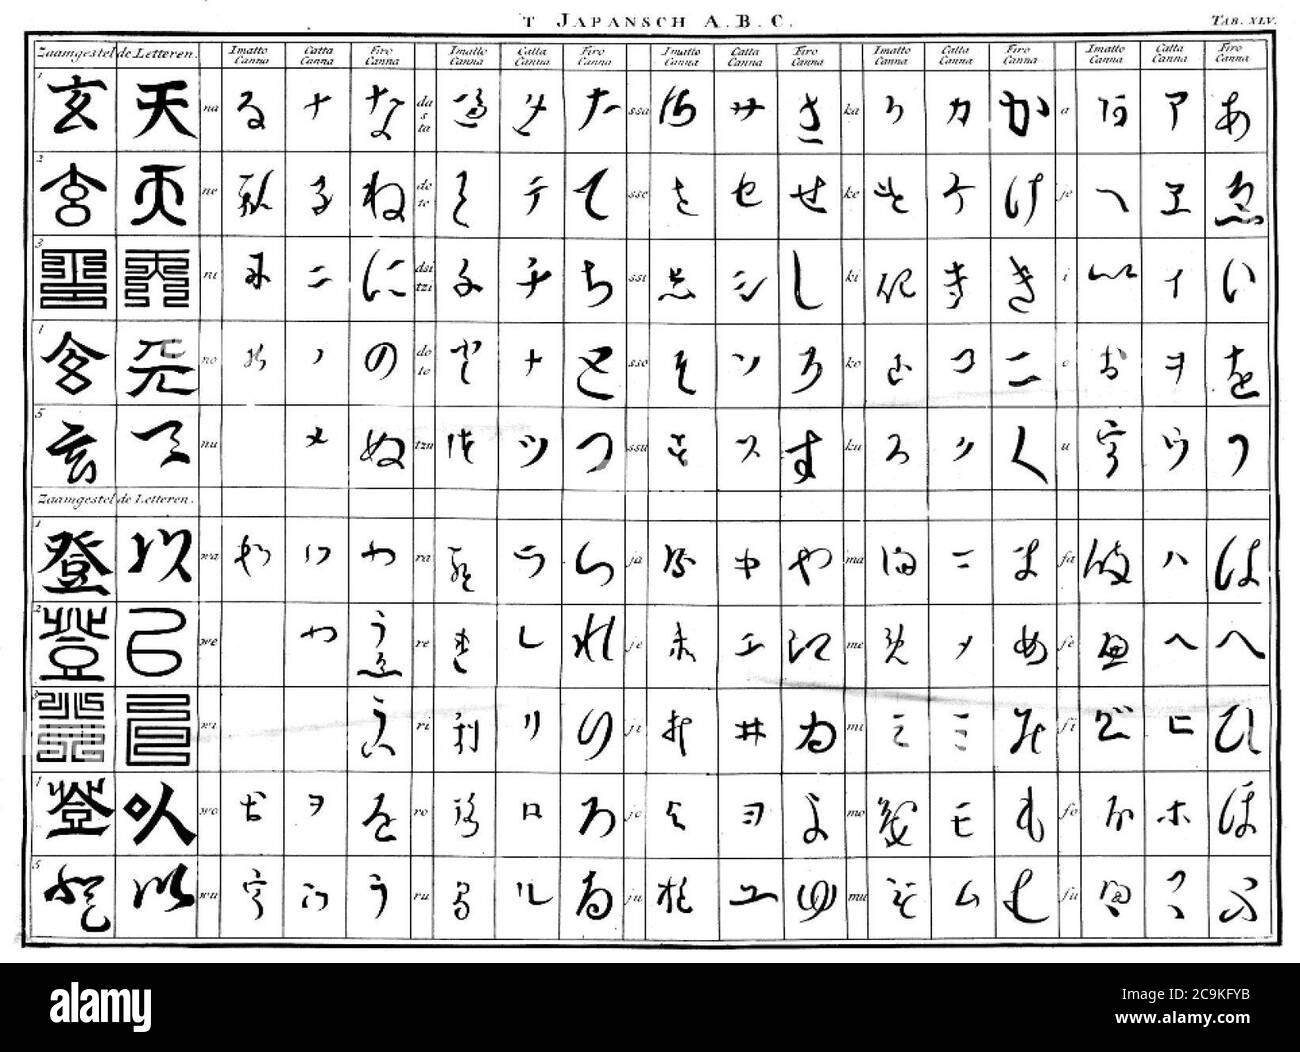 Japanese Alphabet Black And White Stock Photos & Images - Alamy